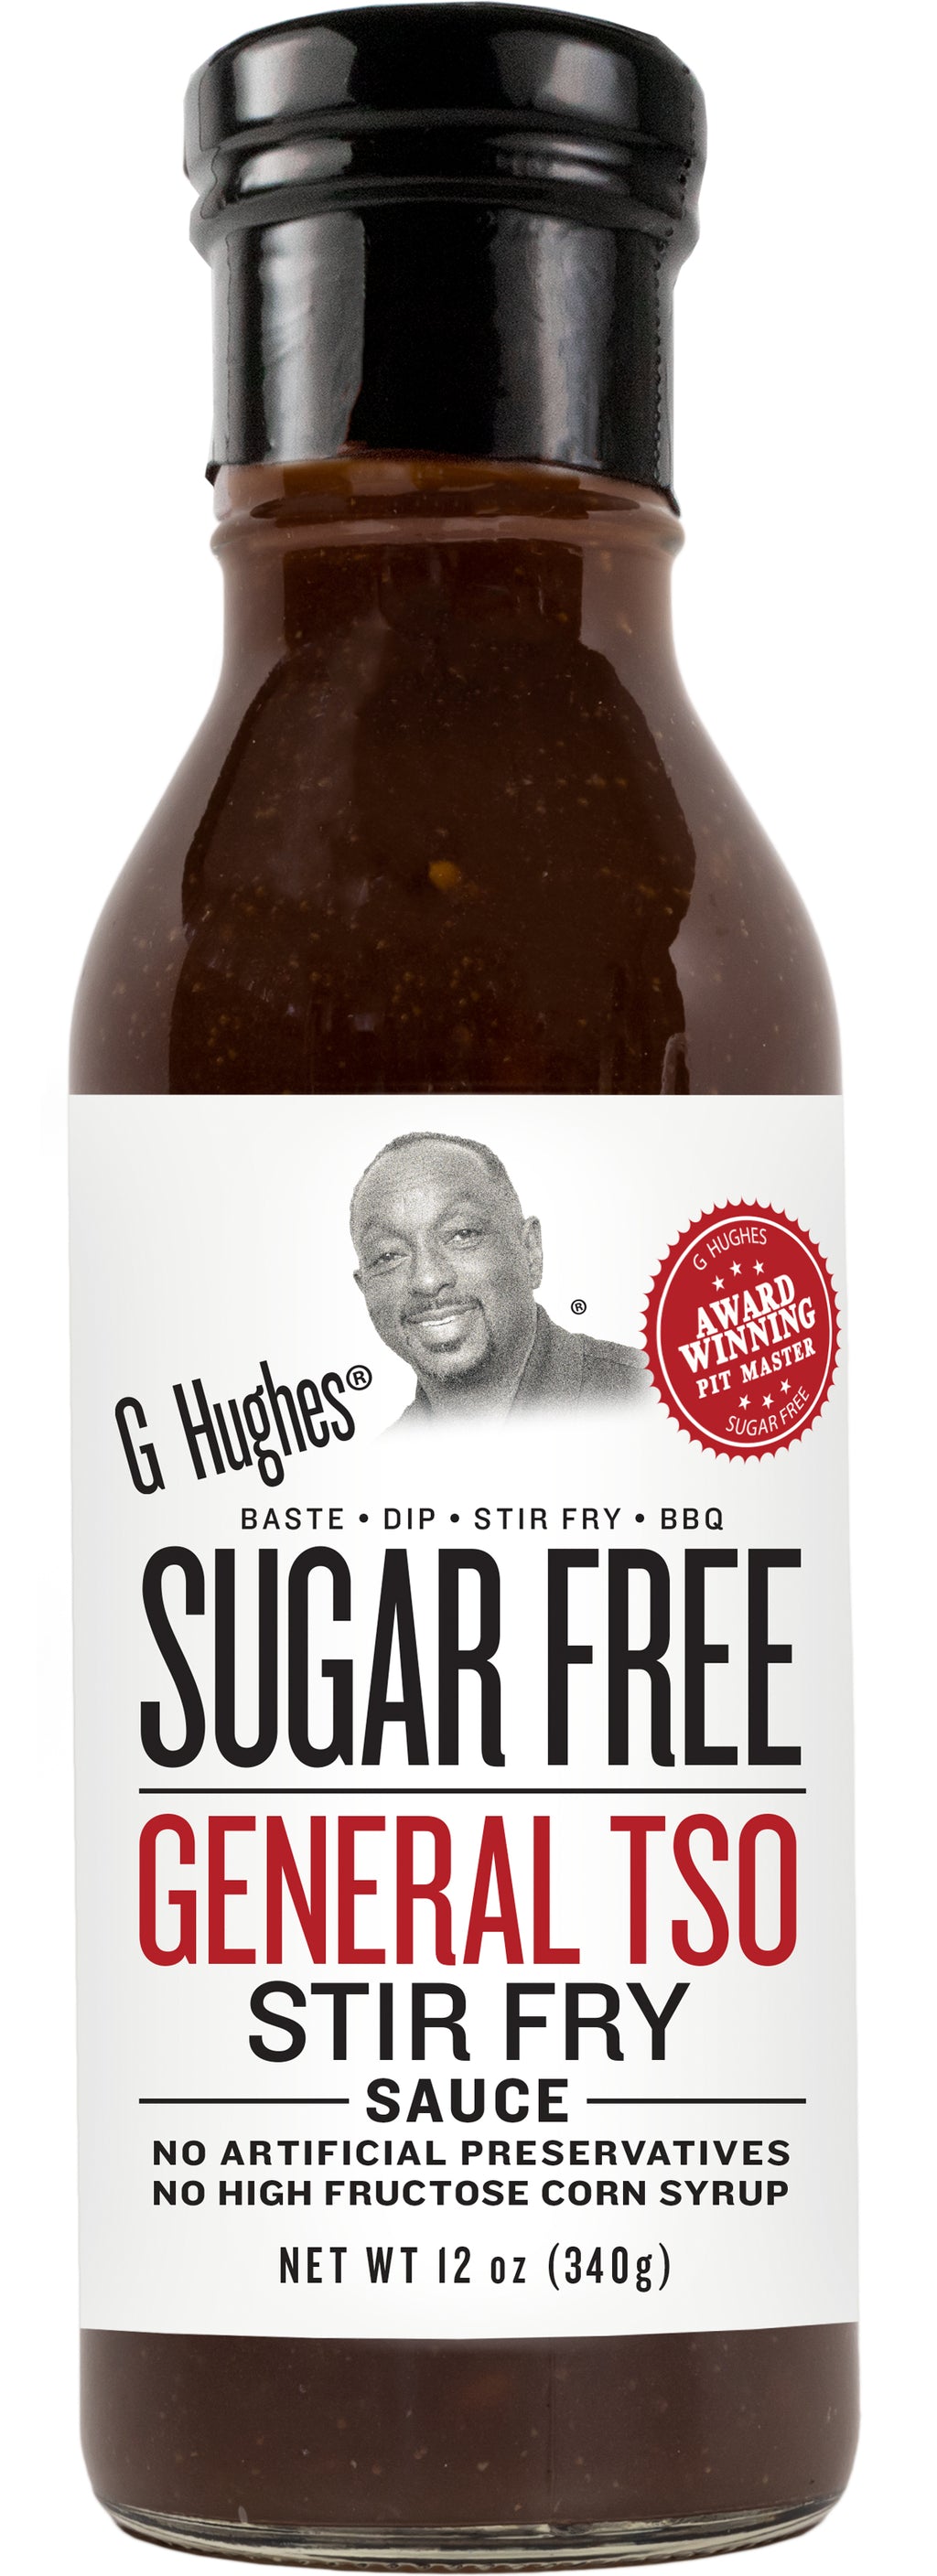 BBQ Sauce — G Hughes Sugar Free Sauce